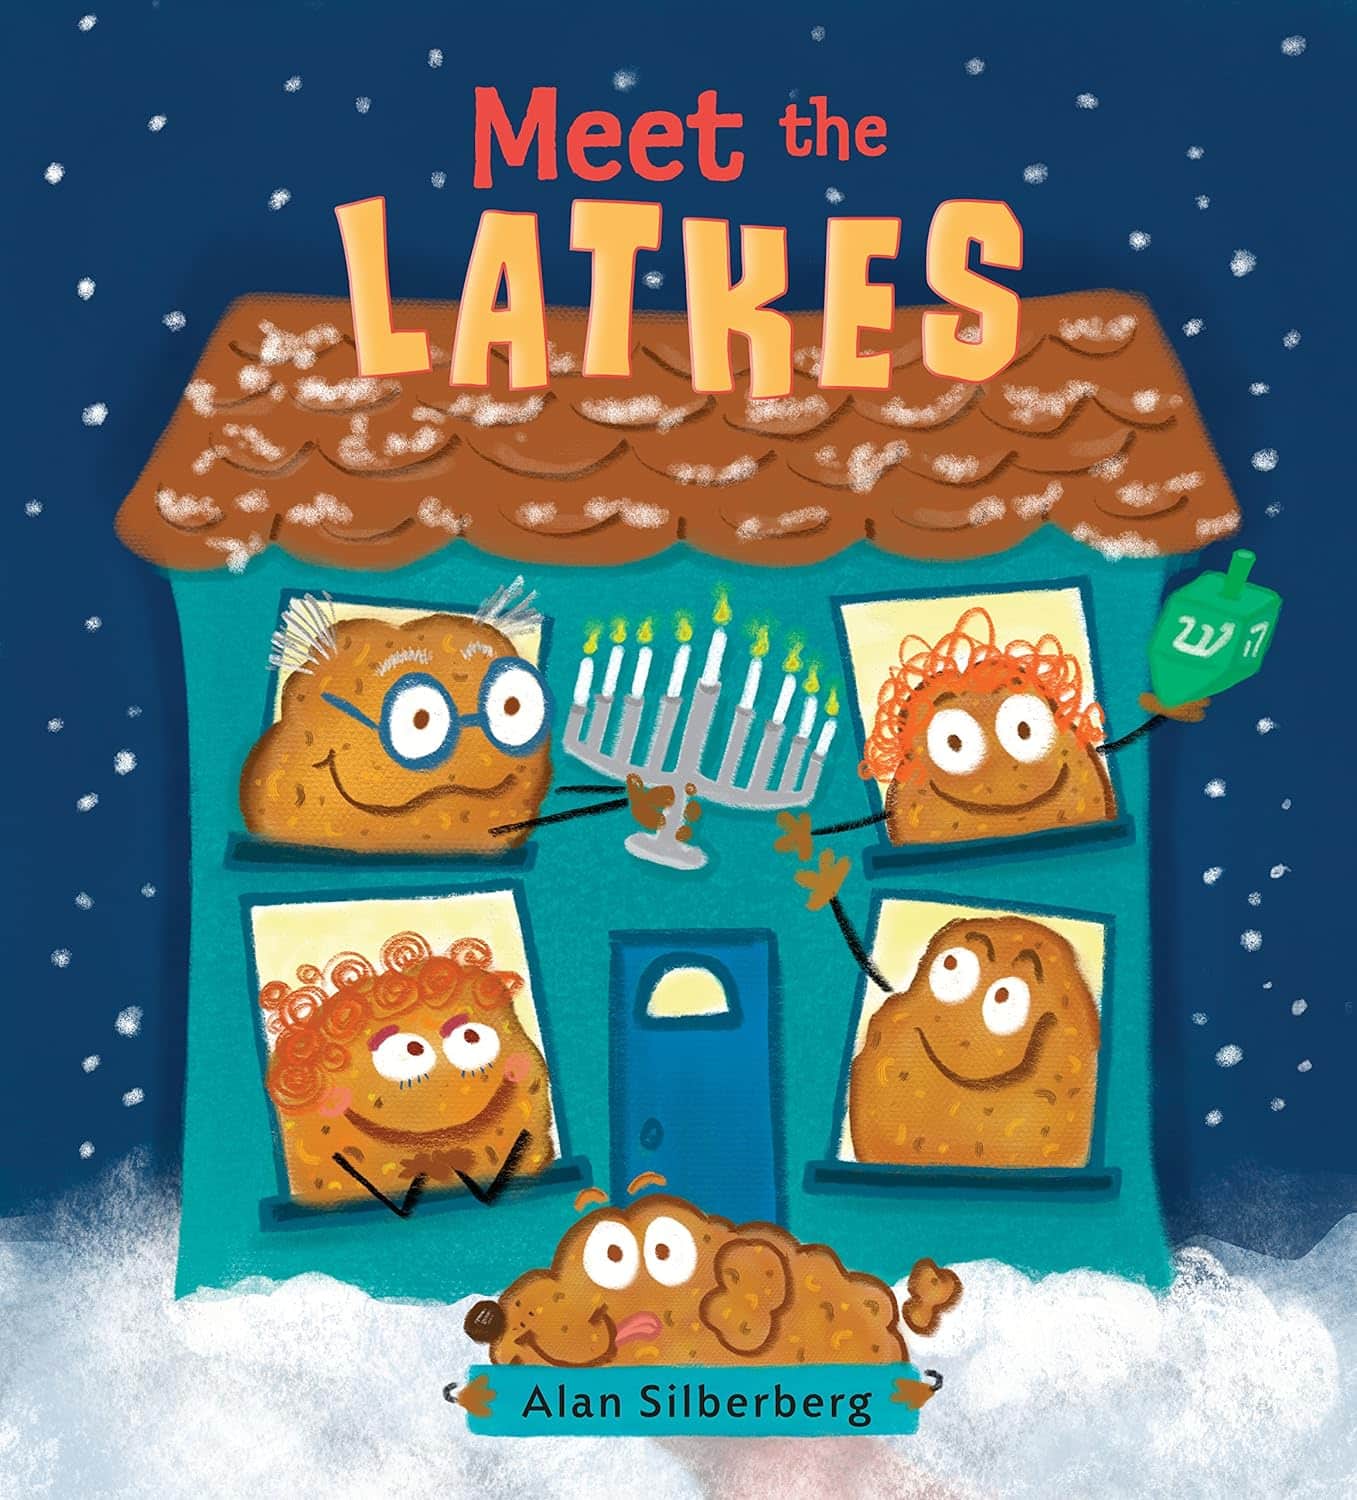 "Meet the Latkes" by Alan Silberberg